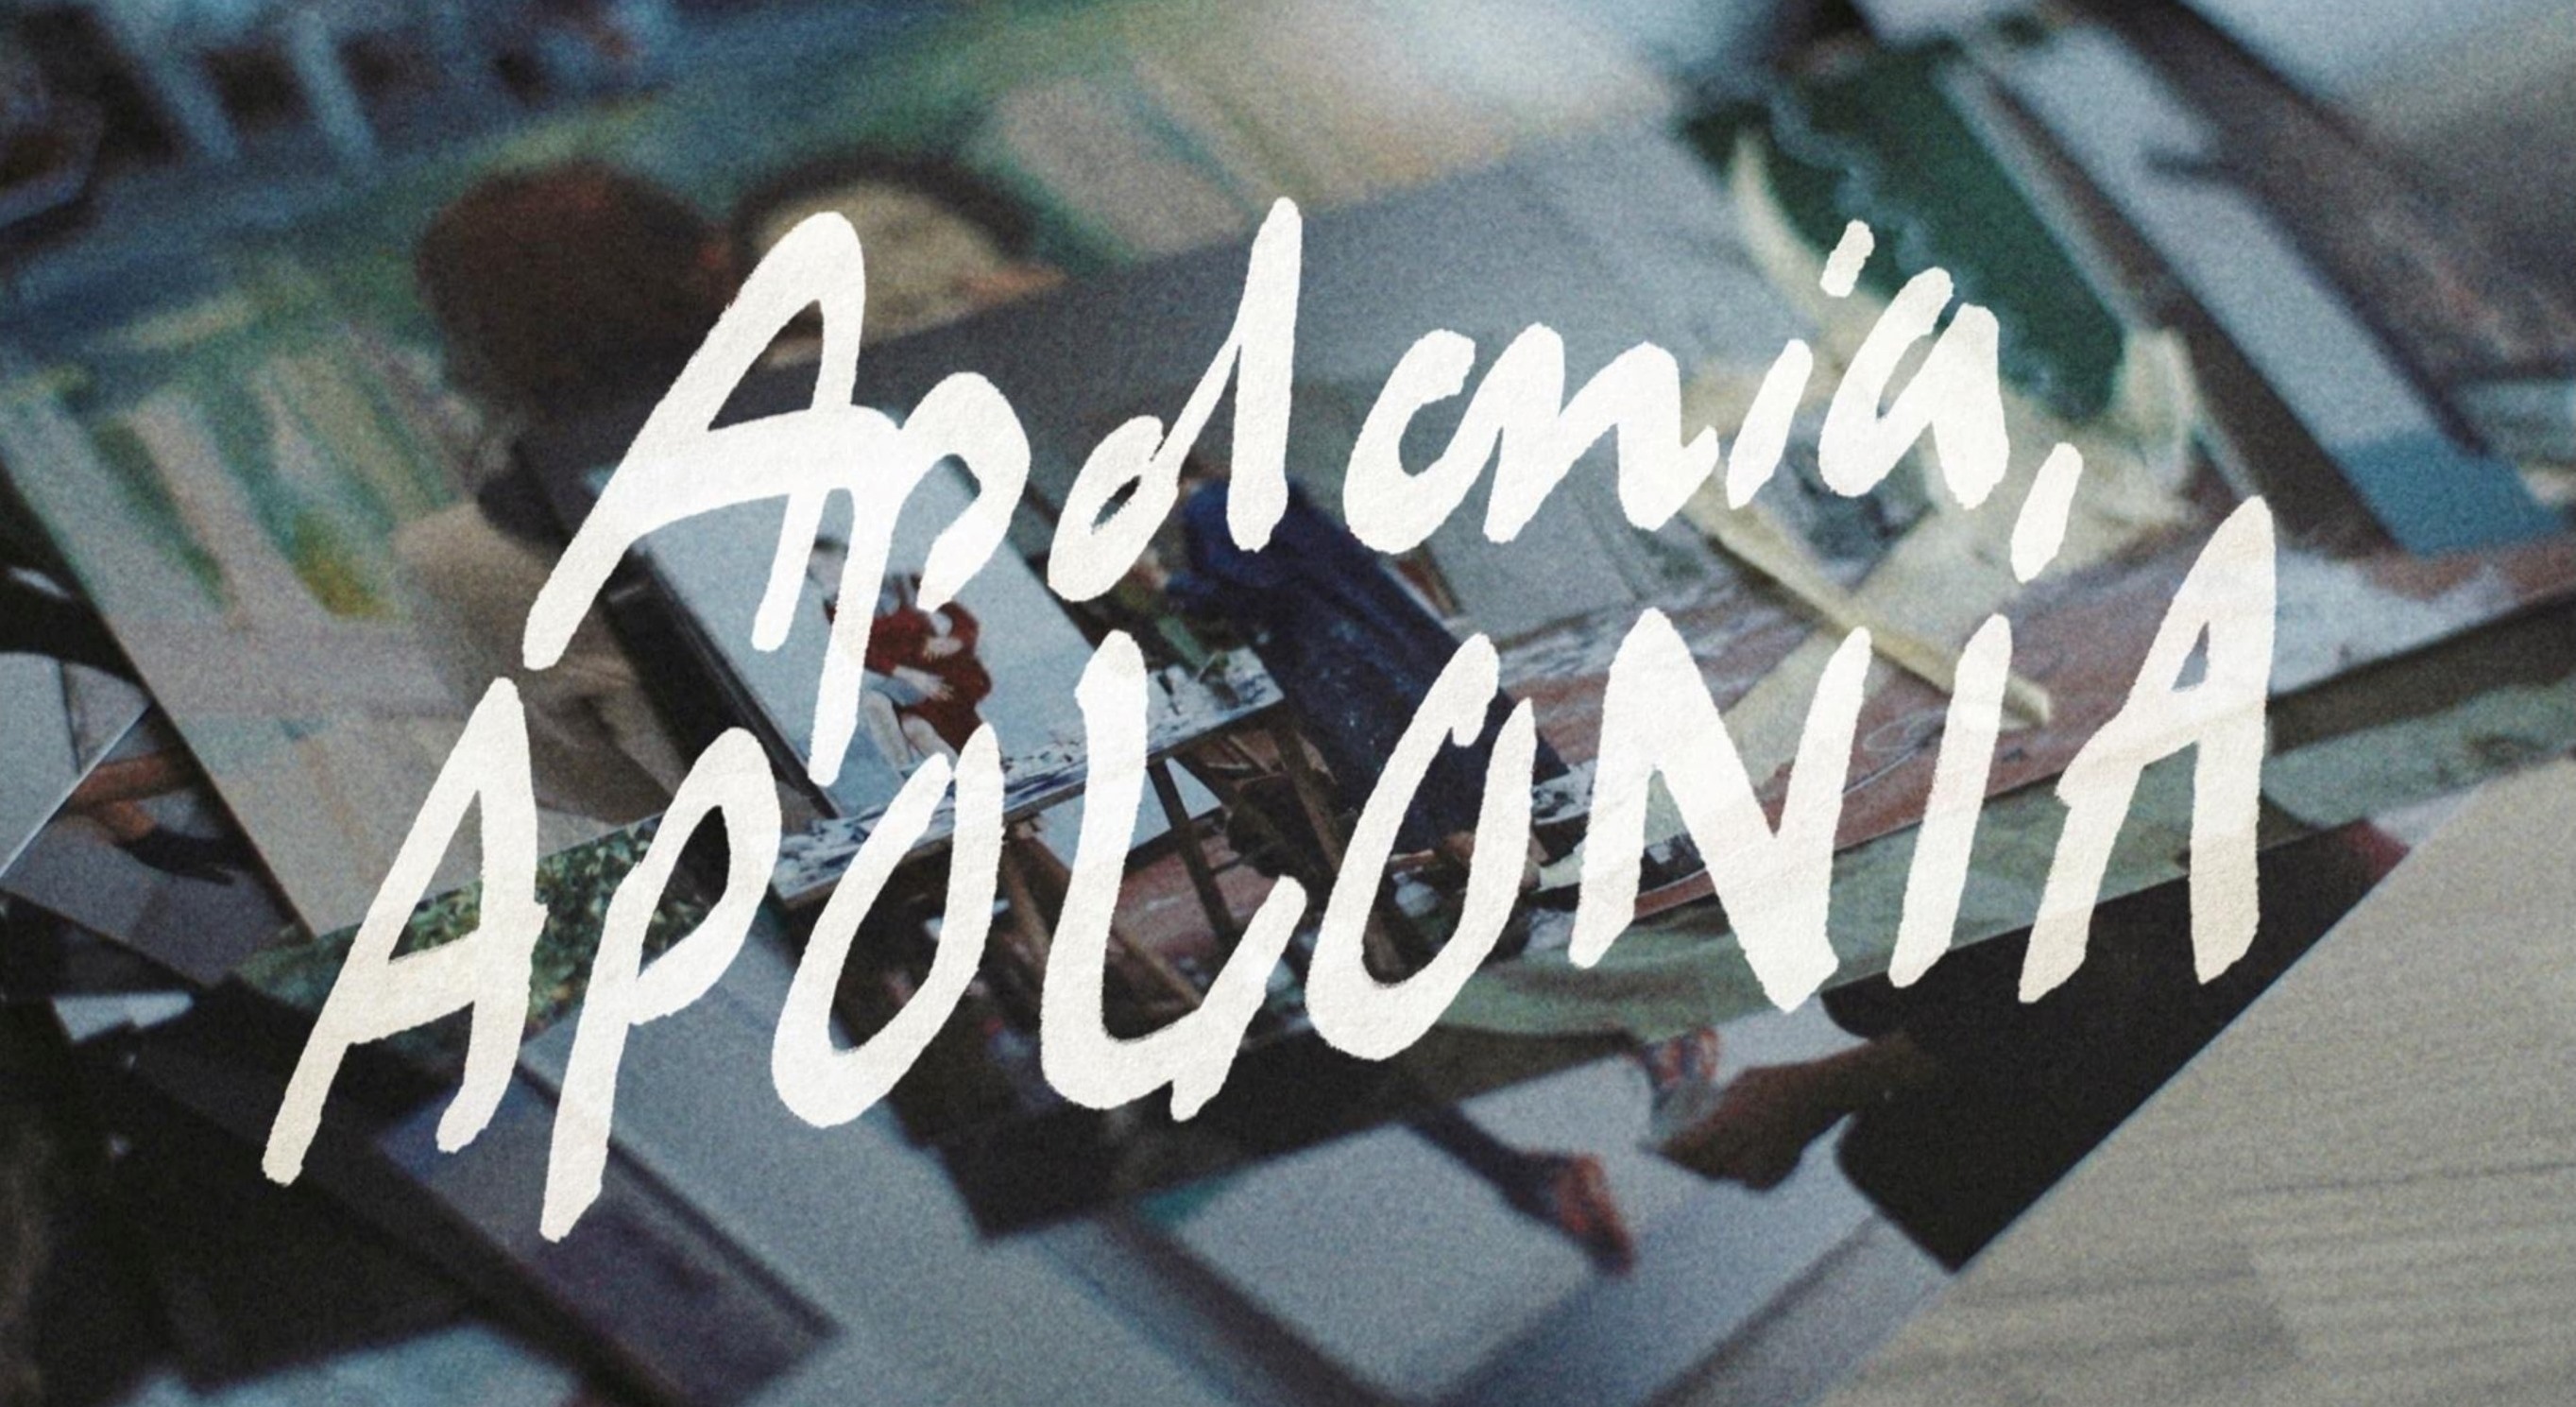 Award-winning film screening of “Apolonia, Apolonia”